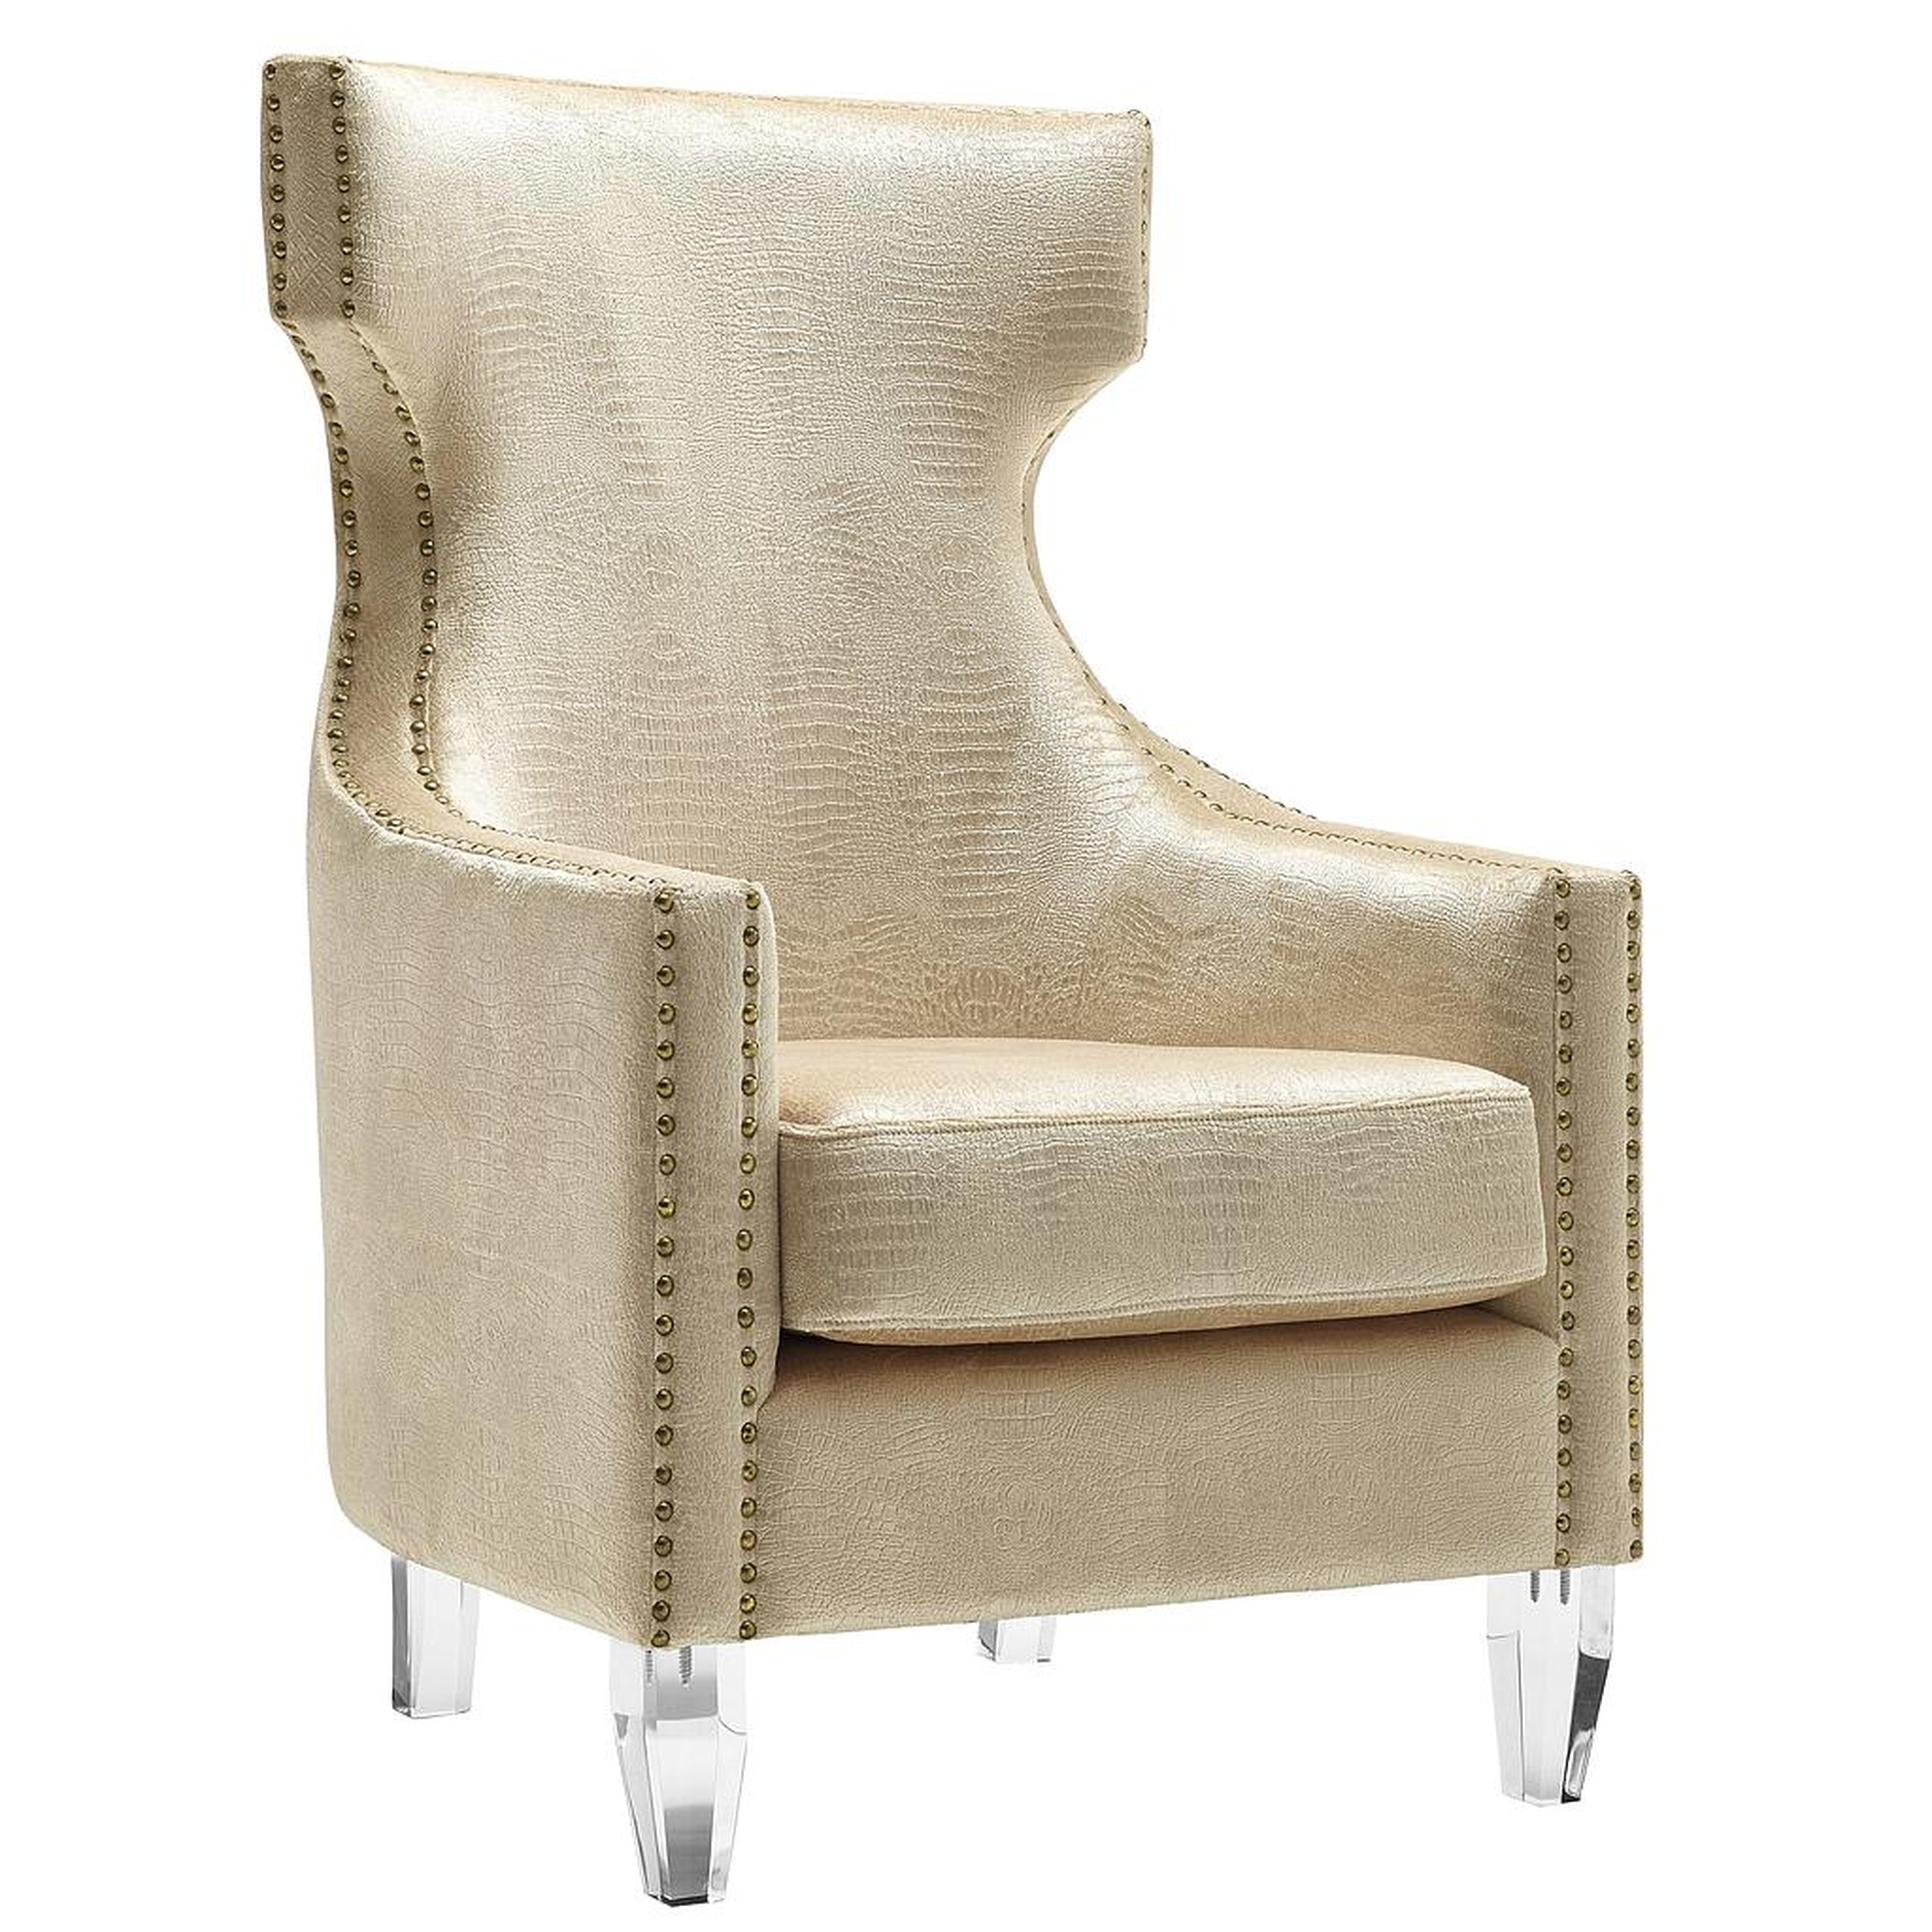 Annalise Lilly Croc Velvet Wing Chair - Maren Home